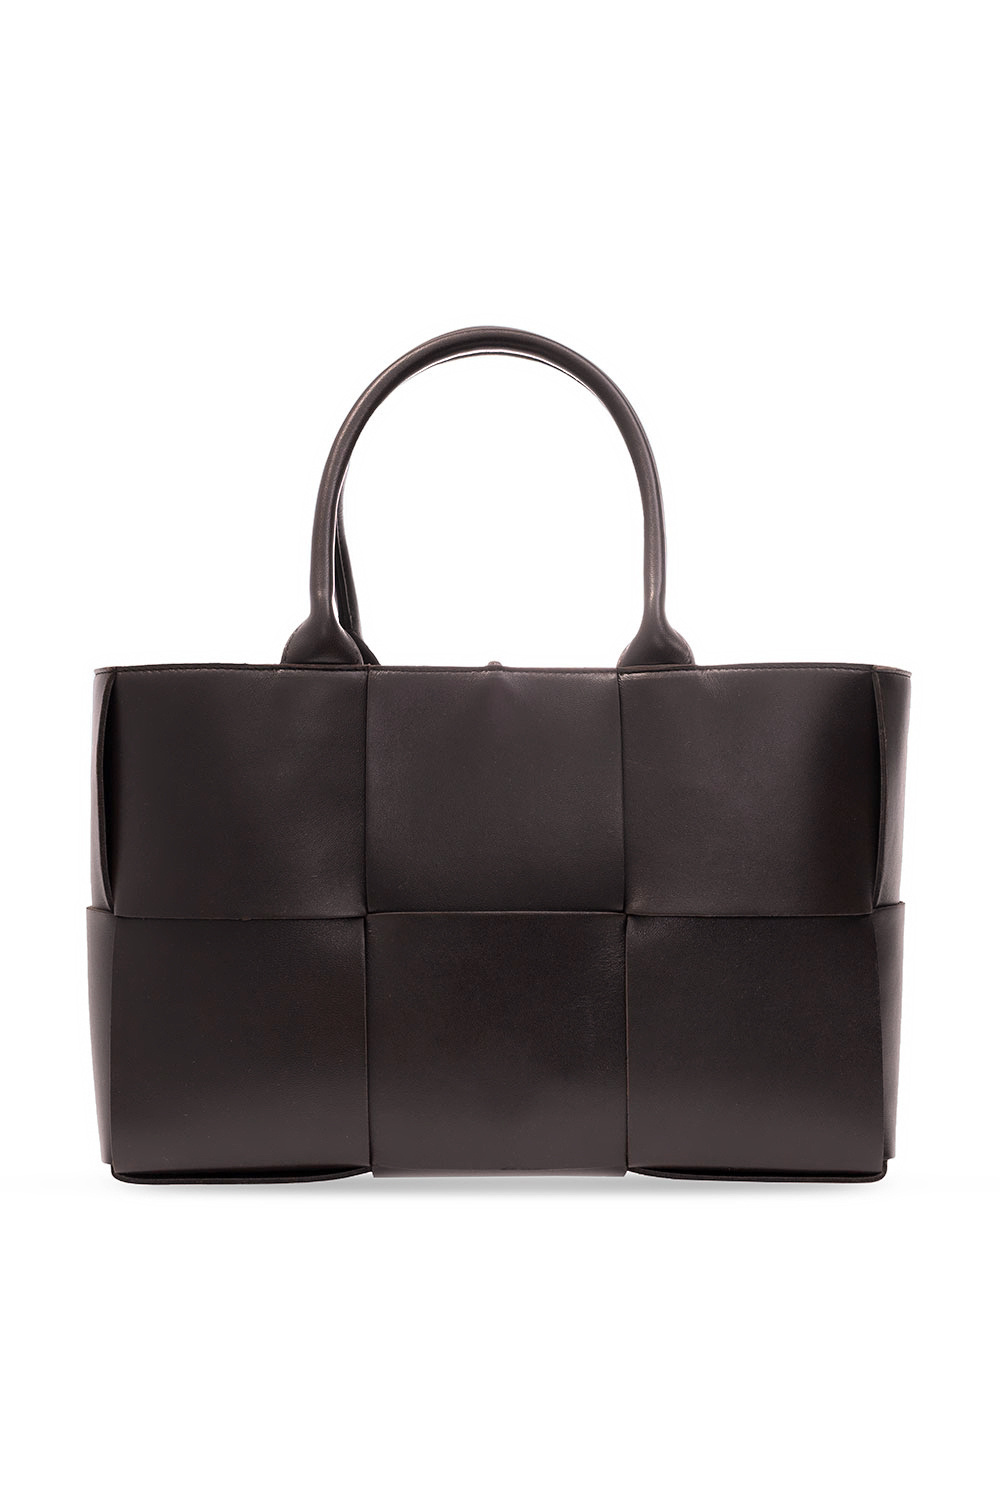 Bottega Veneta ‘Arco Tote’ hand bag